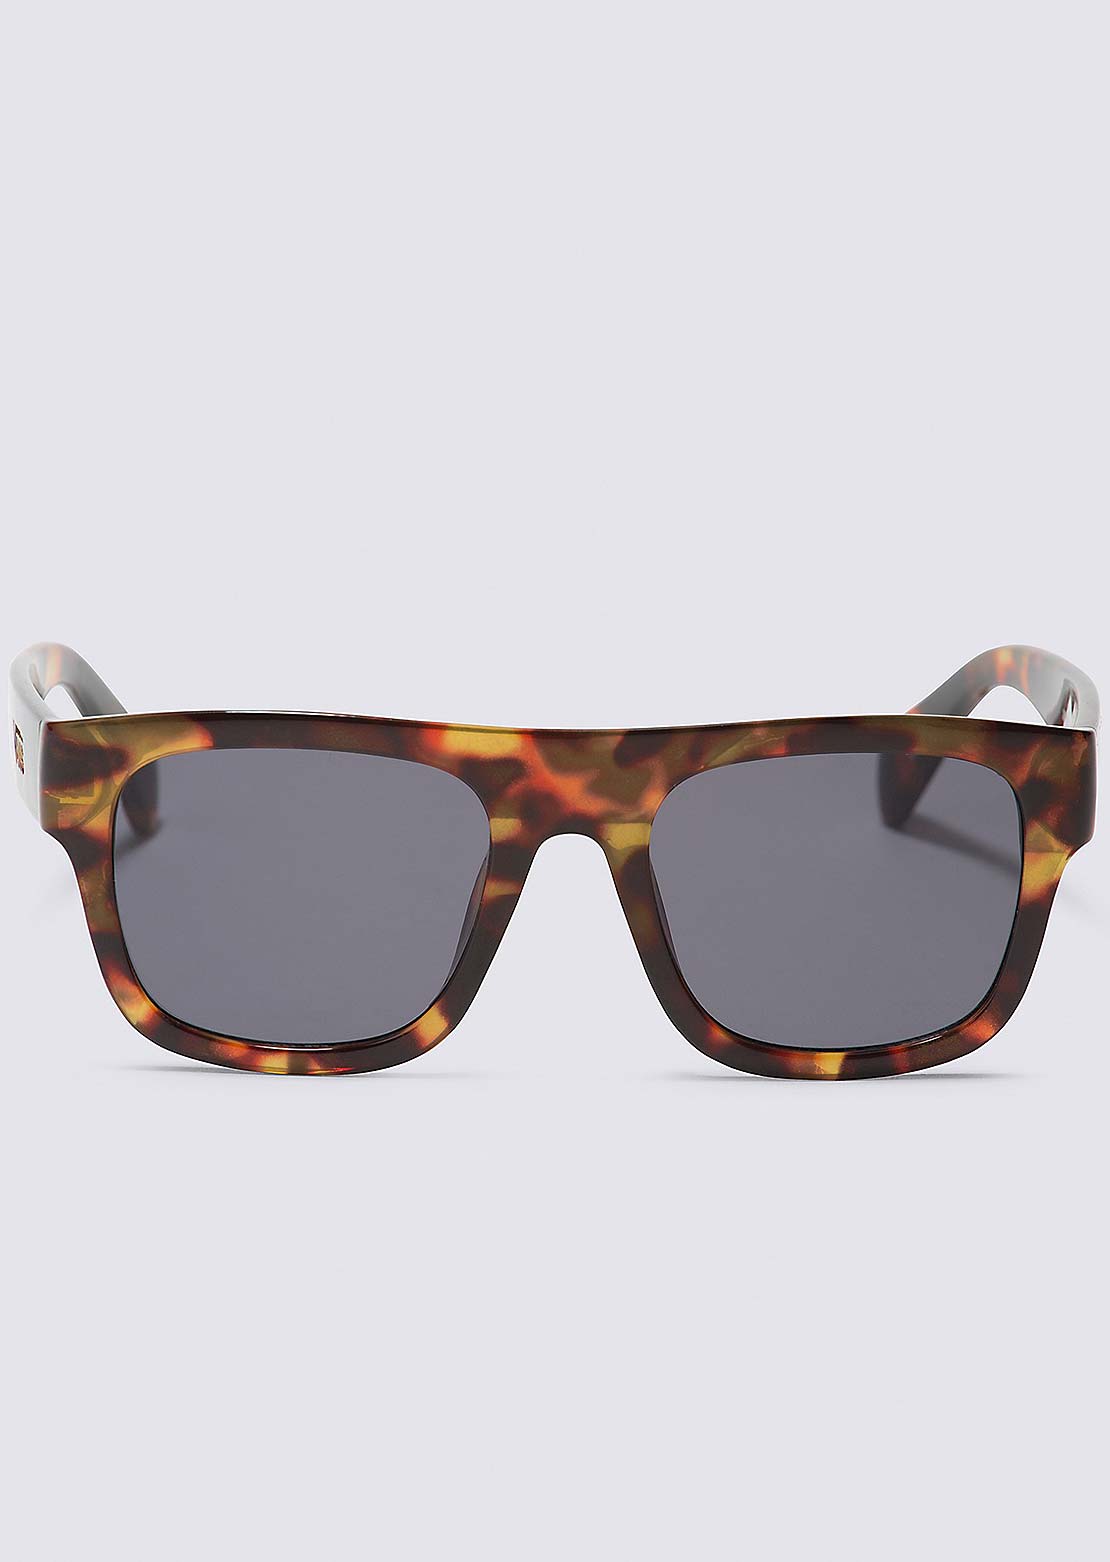 Vans Unisex Squared Off Shades Sunglasses Cheetah Tortoise